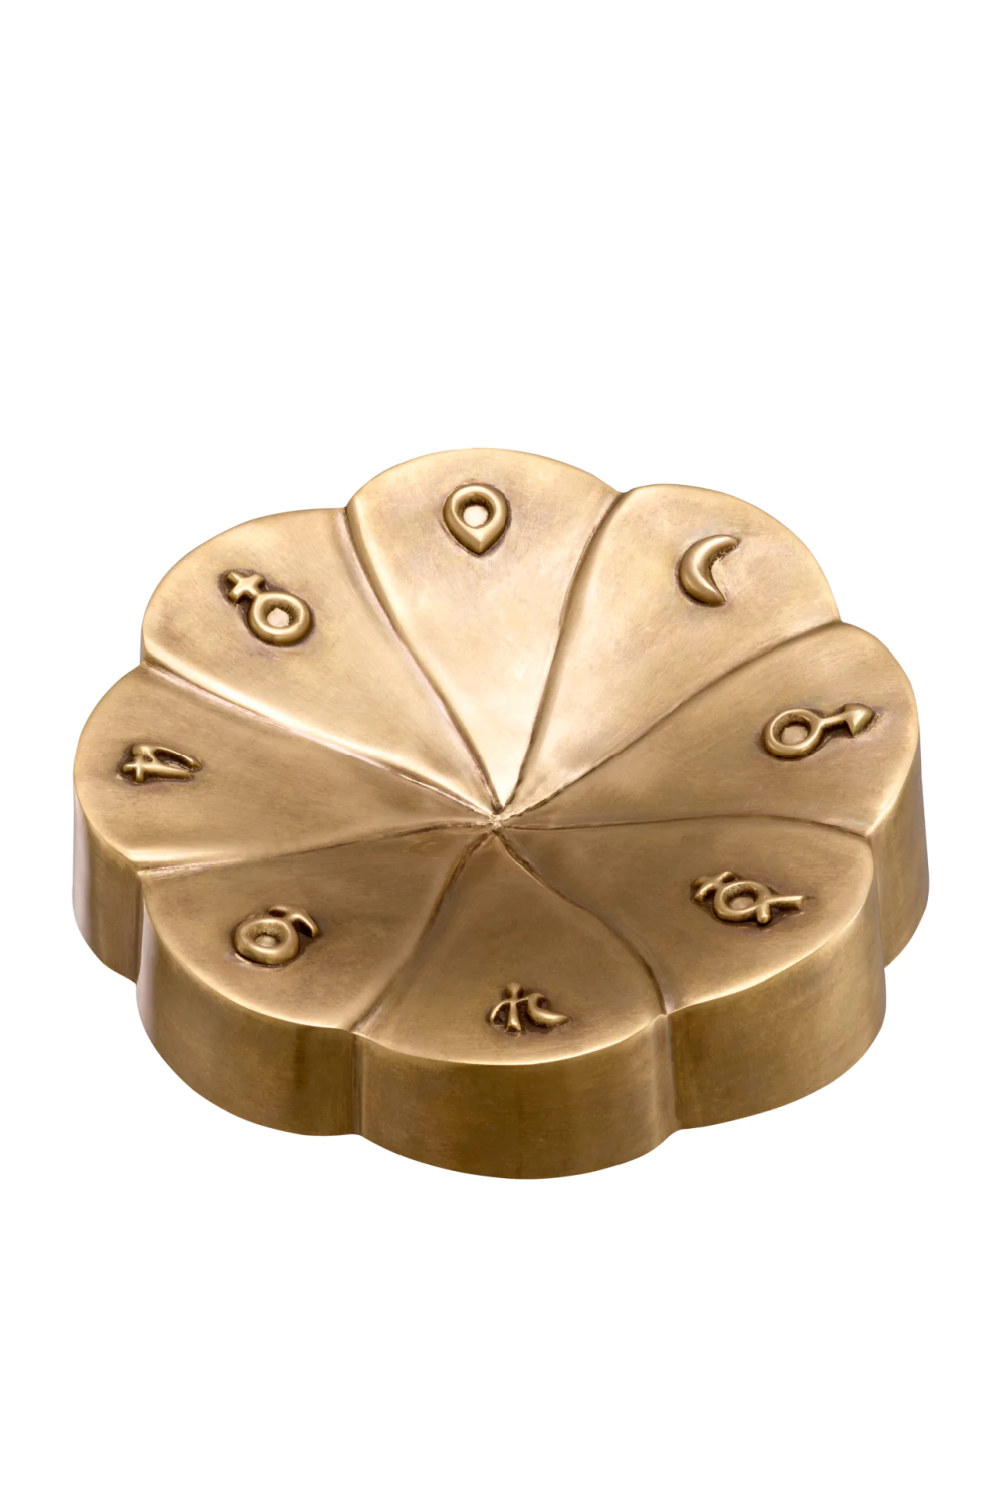 Gold Flower-Shaped Decorative Object | Eichholtz Lumeria | Oroa.com